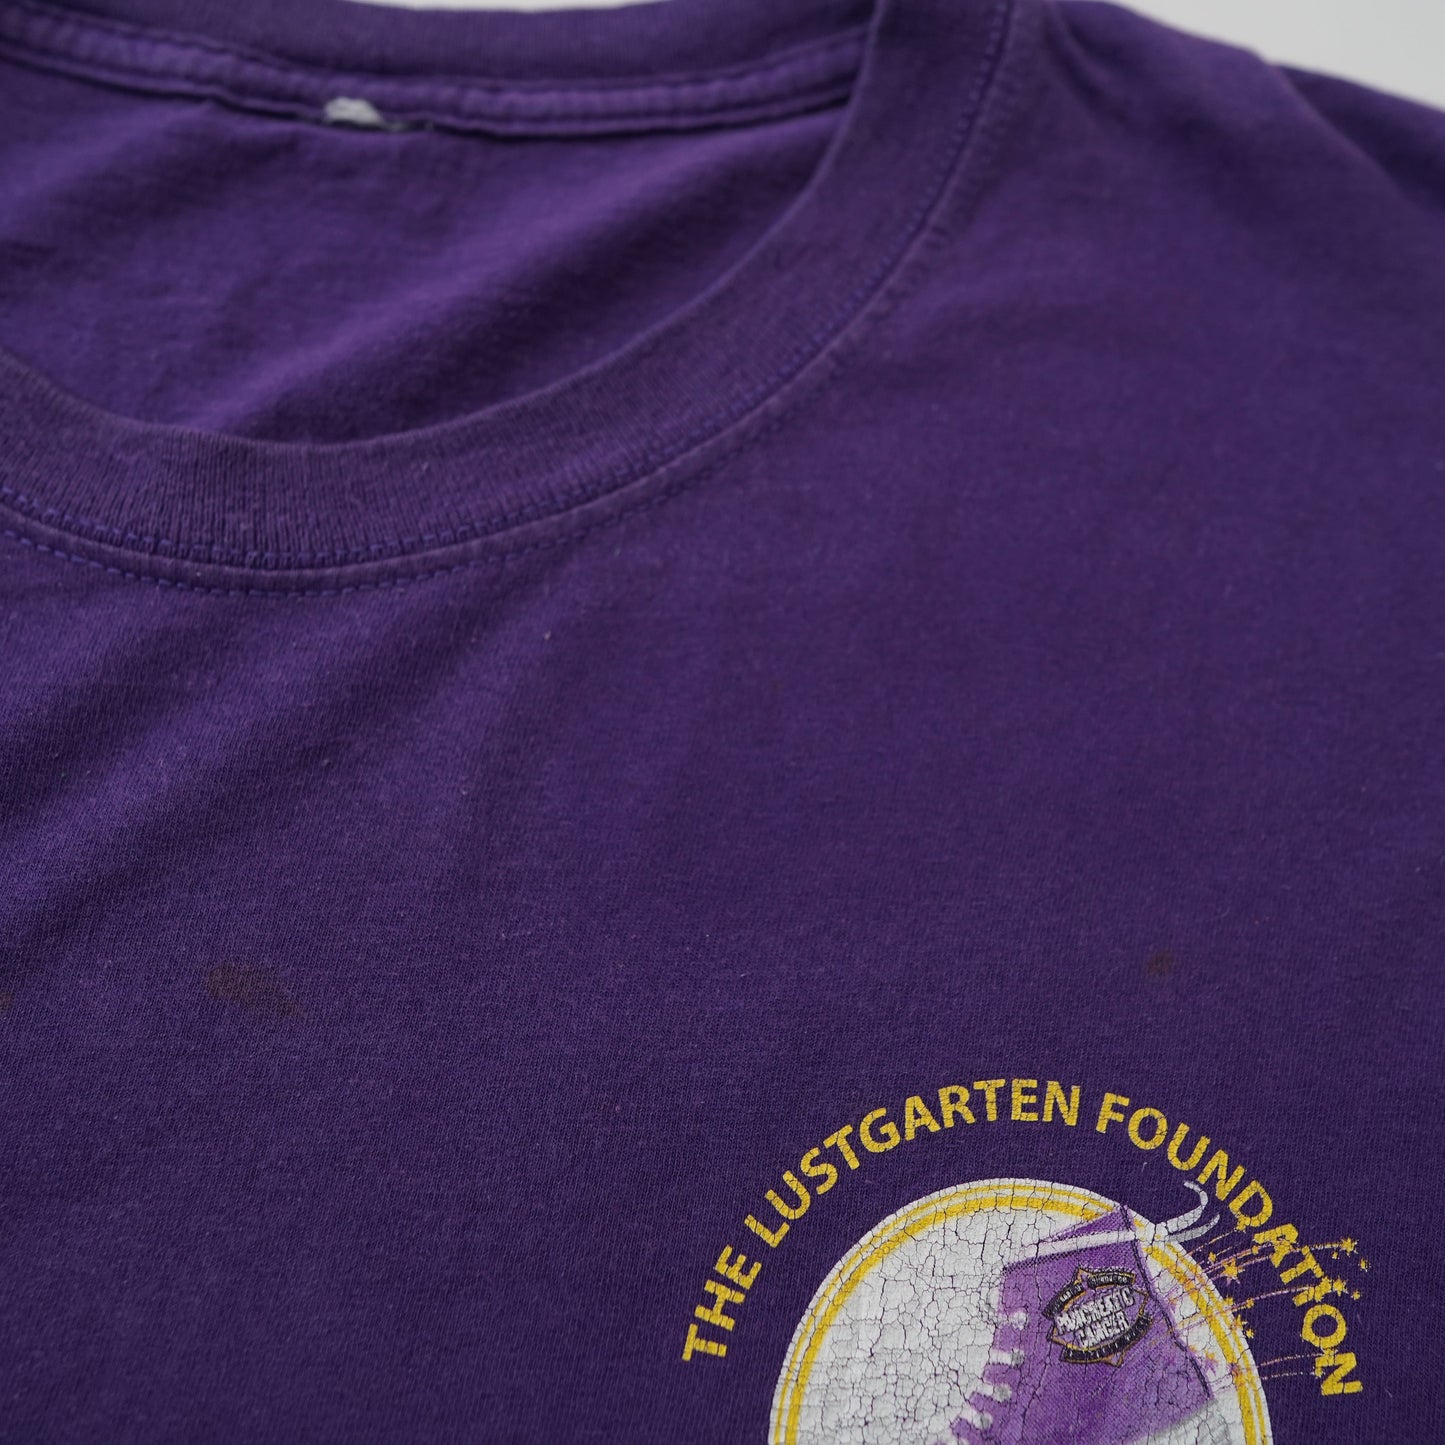 The Lustgarten Foundation tee